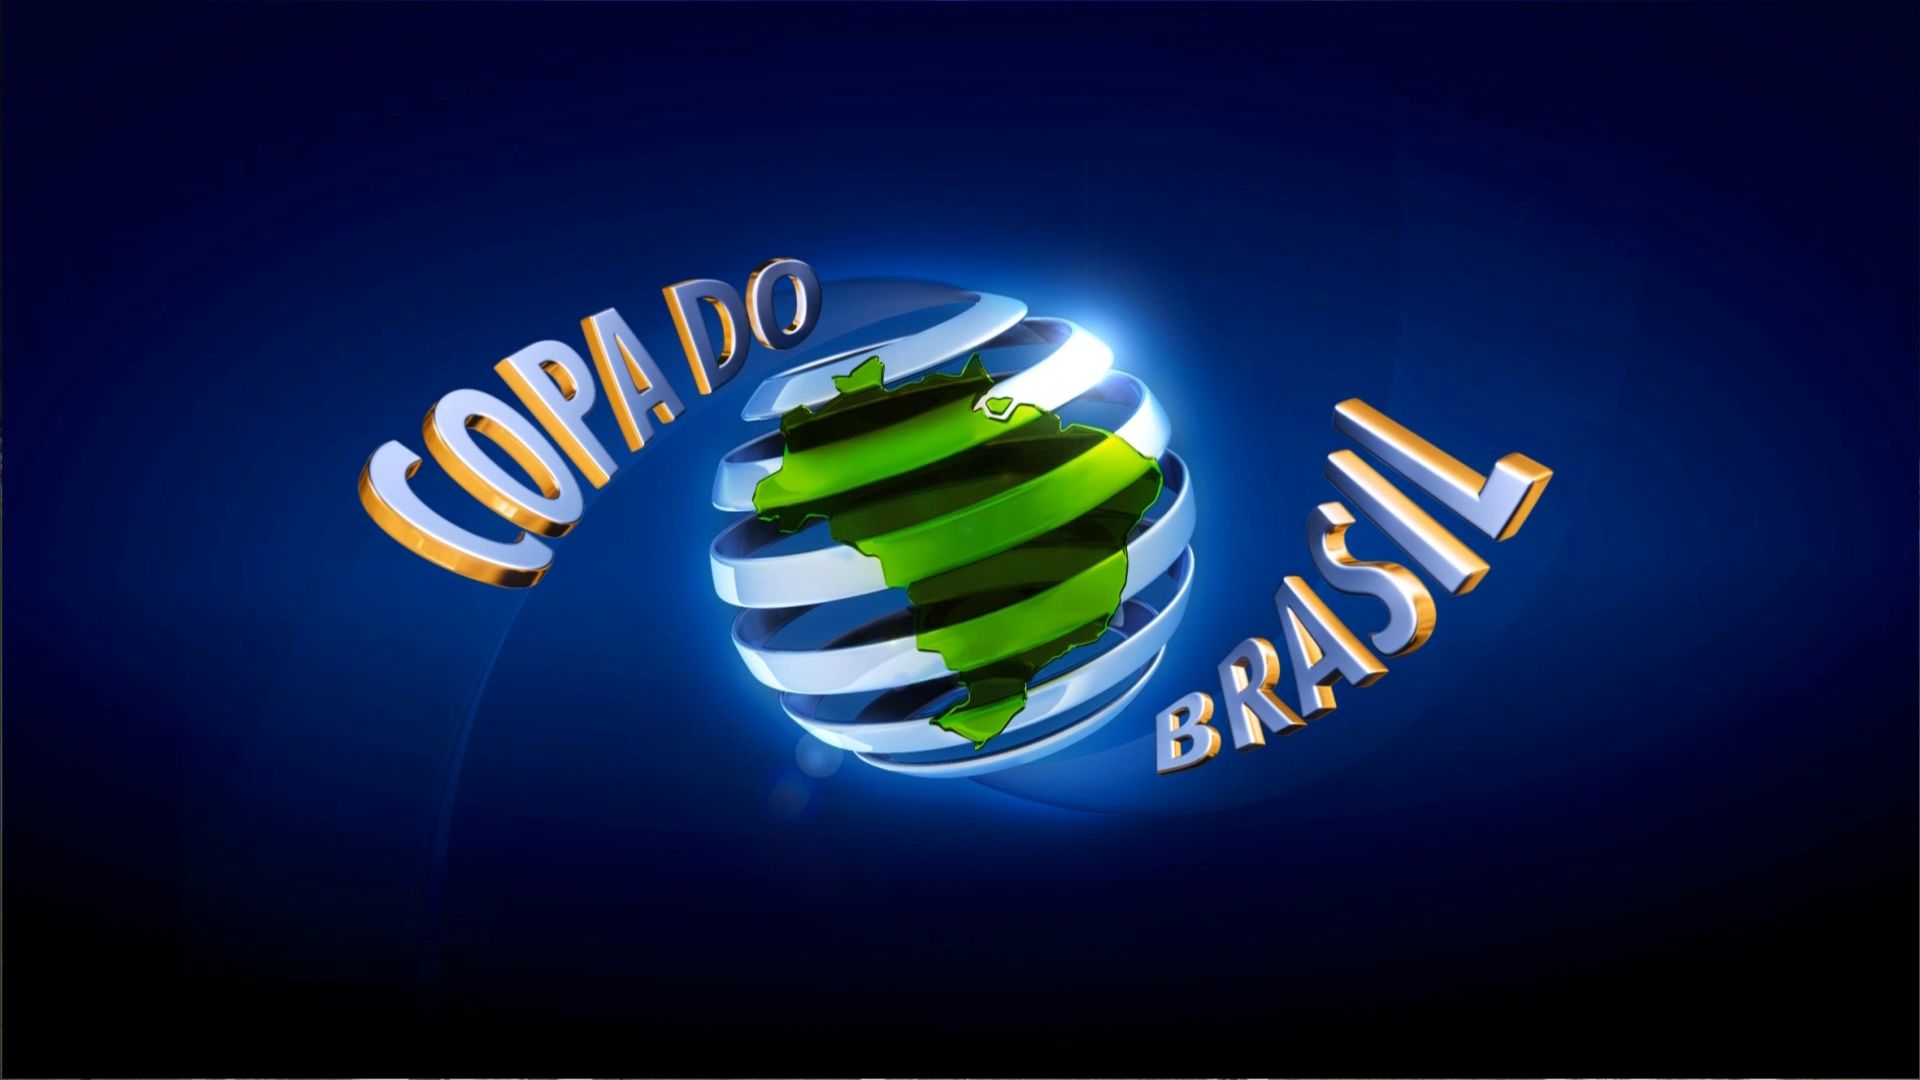 JOGO DA GLOBO HOJE (06/11): Qual jogo vai passar na Globo ao vivo